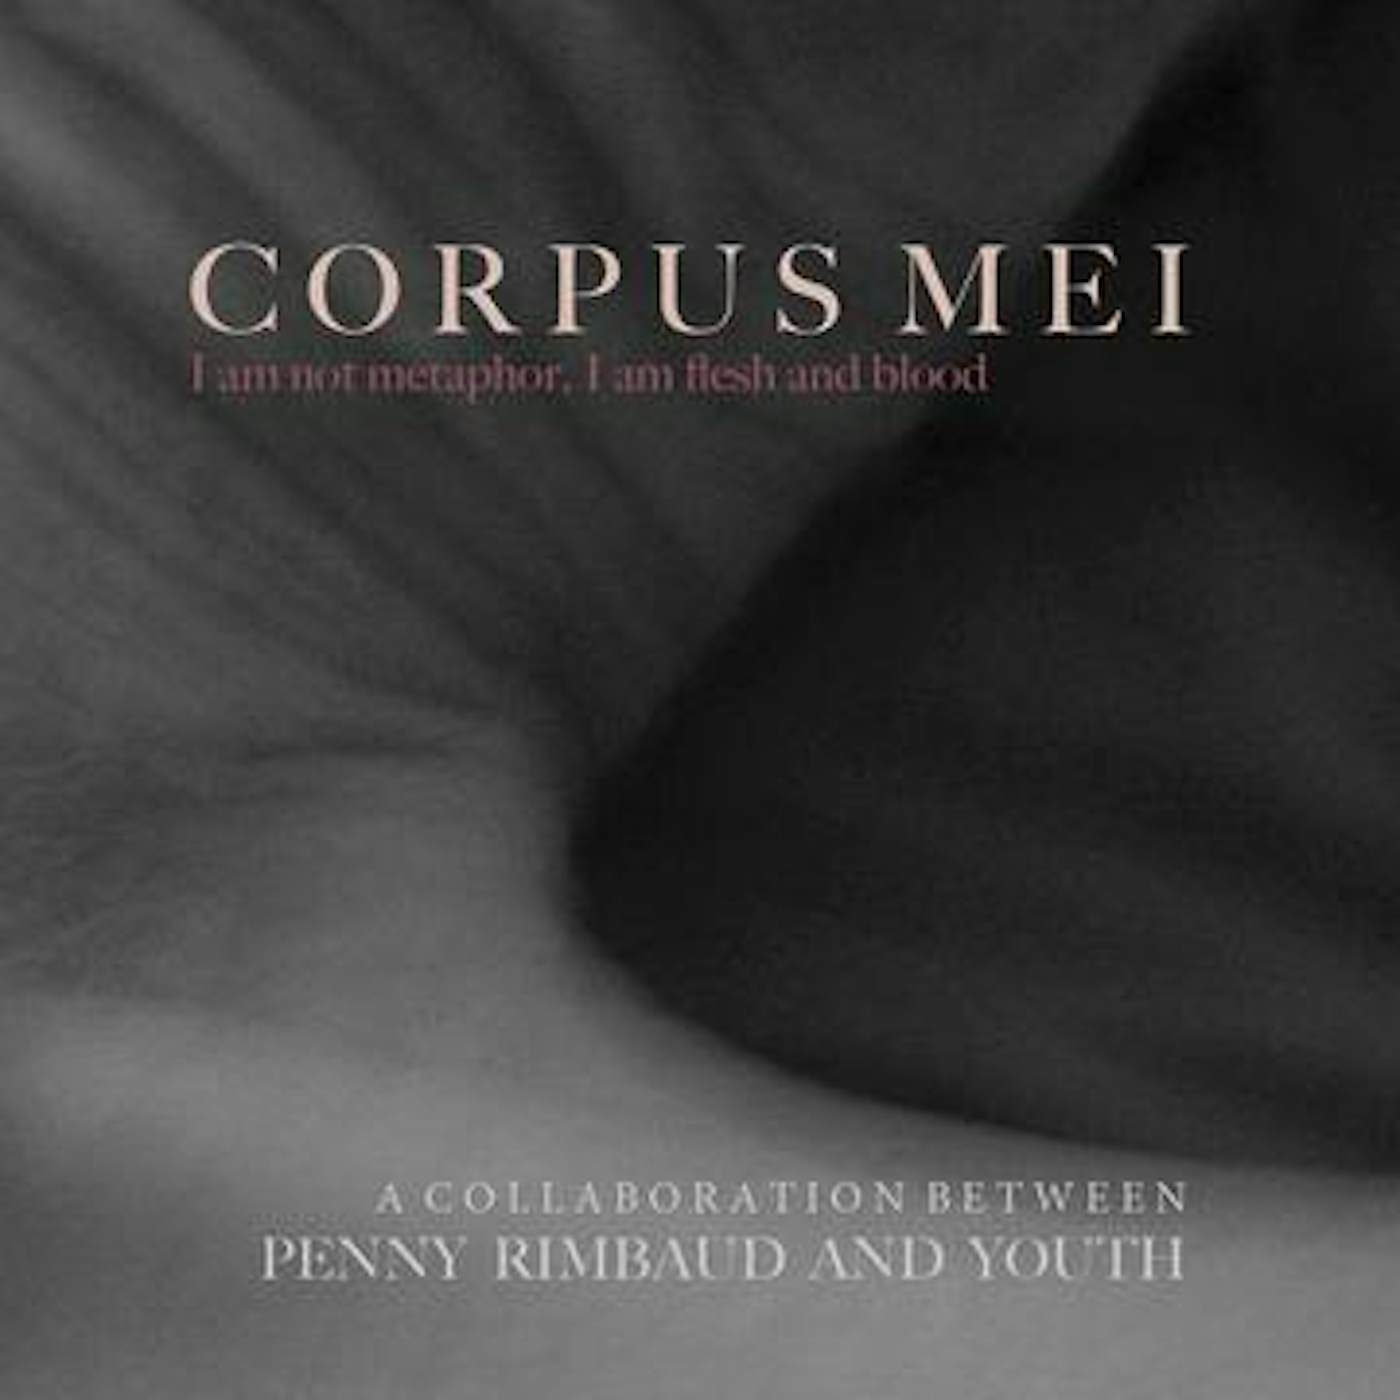 Penny Rimbaud Corpus Mei Vinyl Record